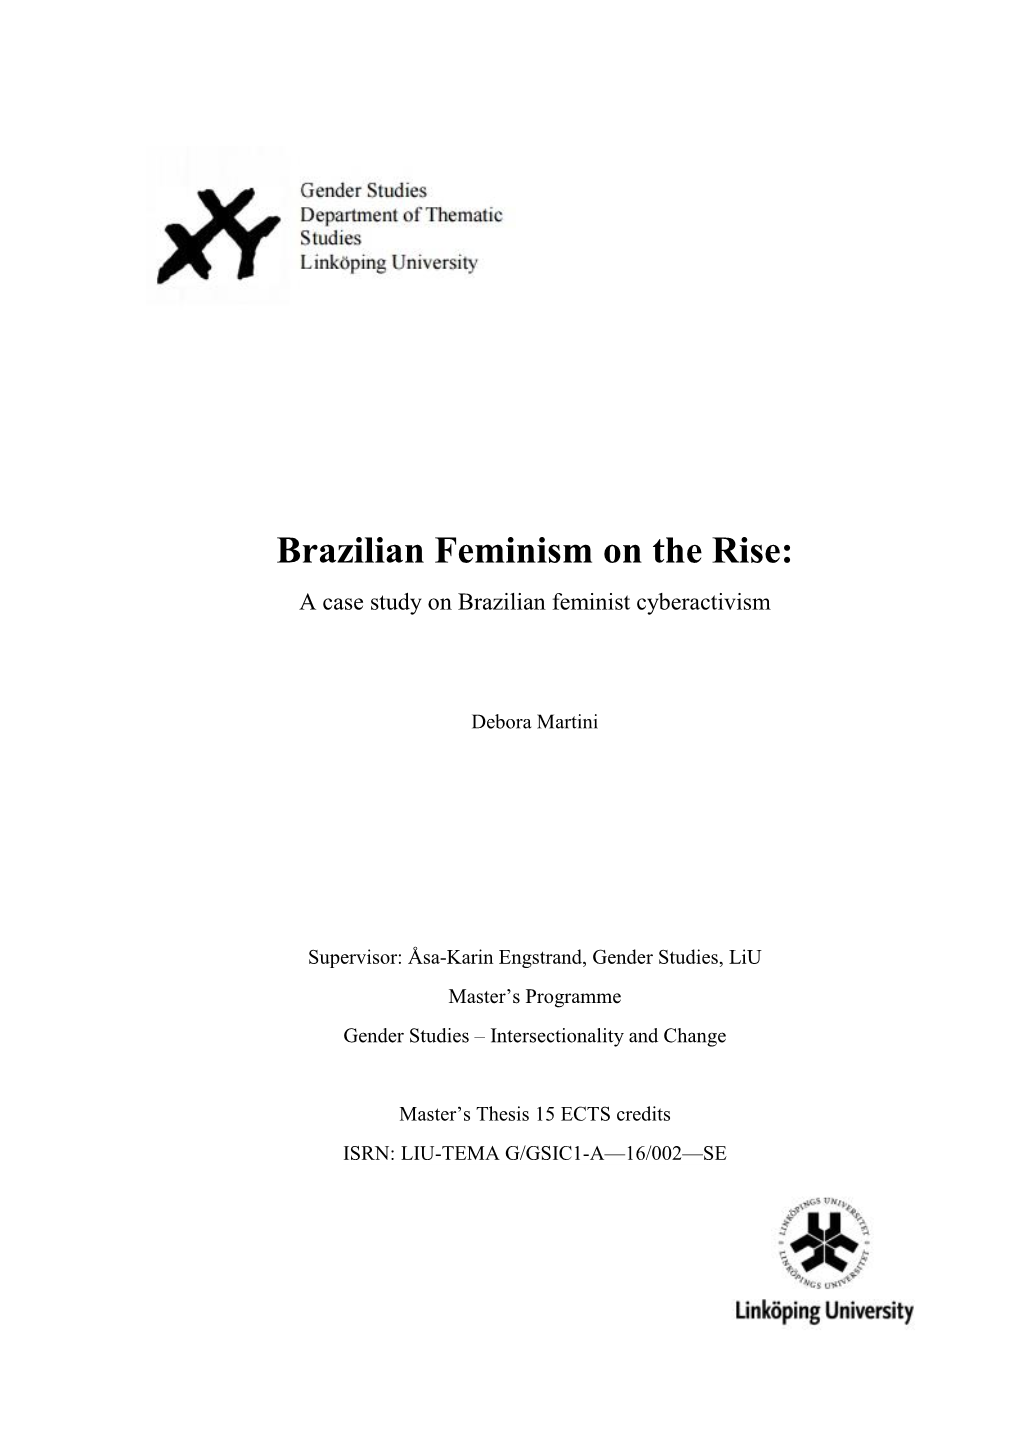 Brazilian Feminism on the Rise: a Case Study on Brazilian Feminist Cyberactivism